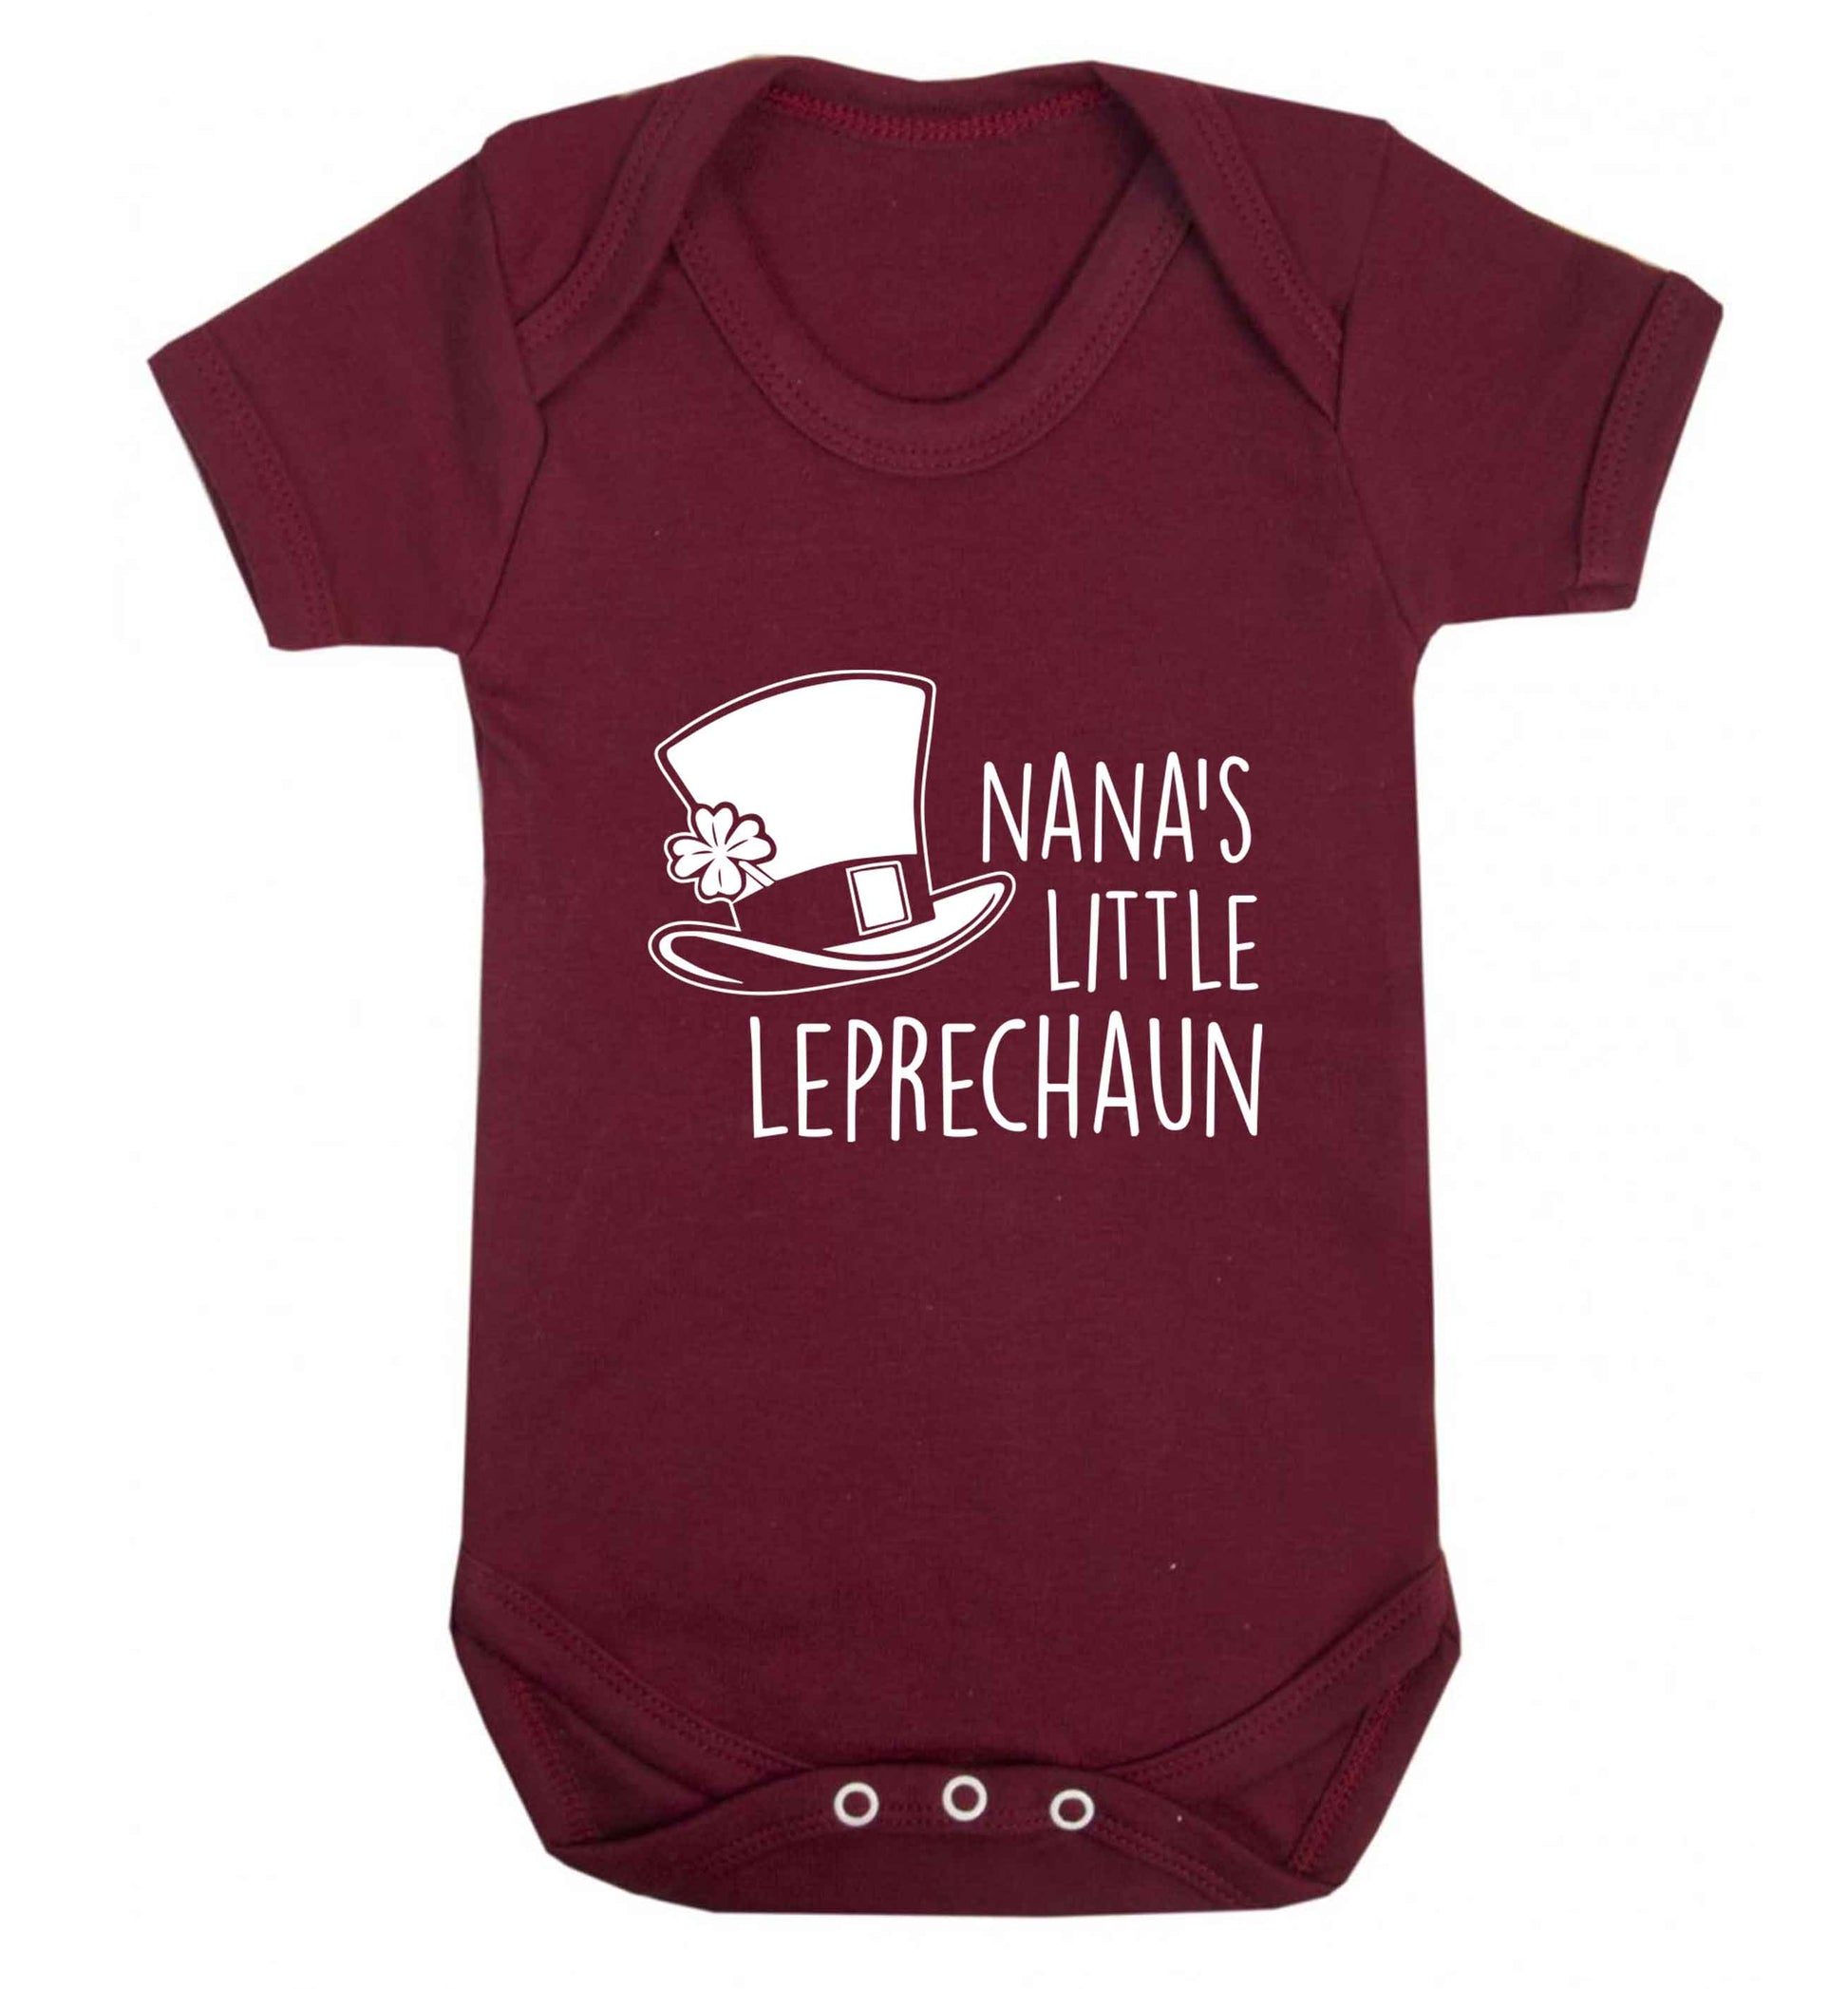 Nana's little leprechaun baby vest maroon 18-24 months